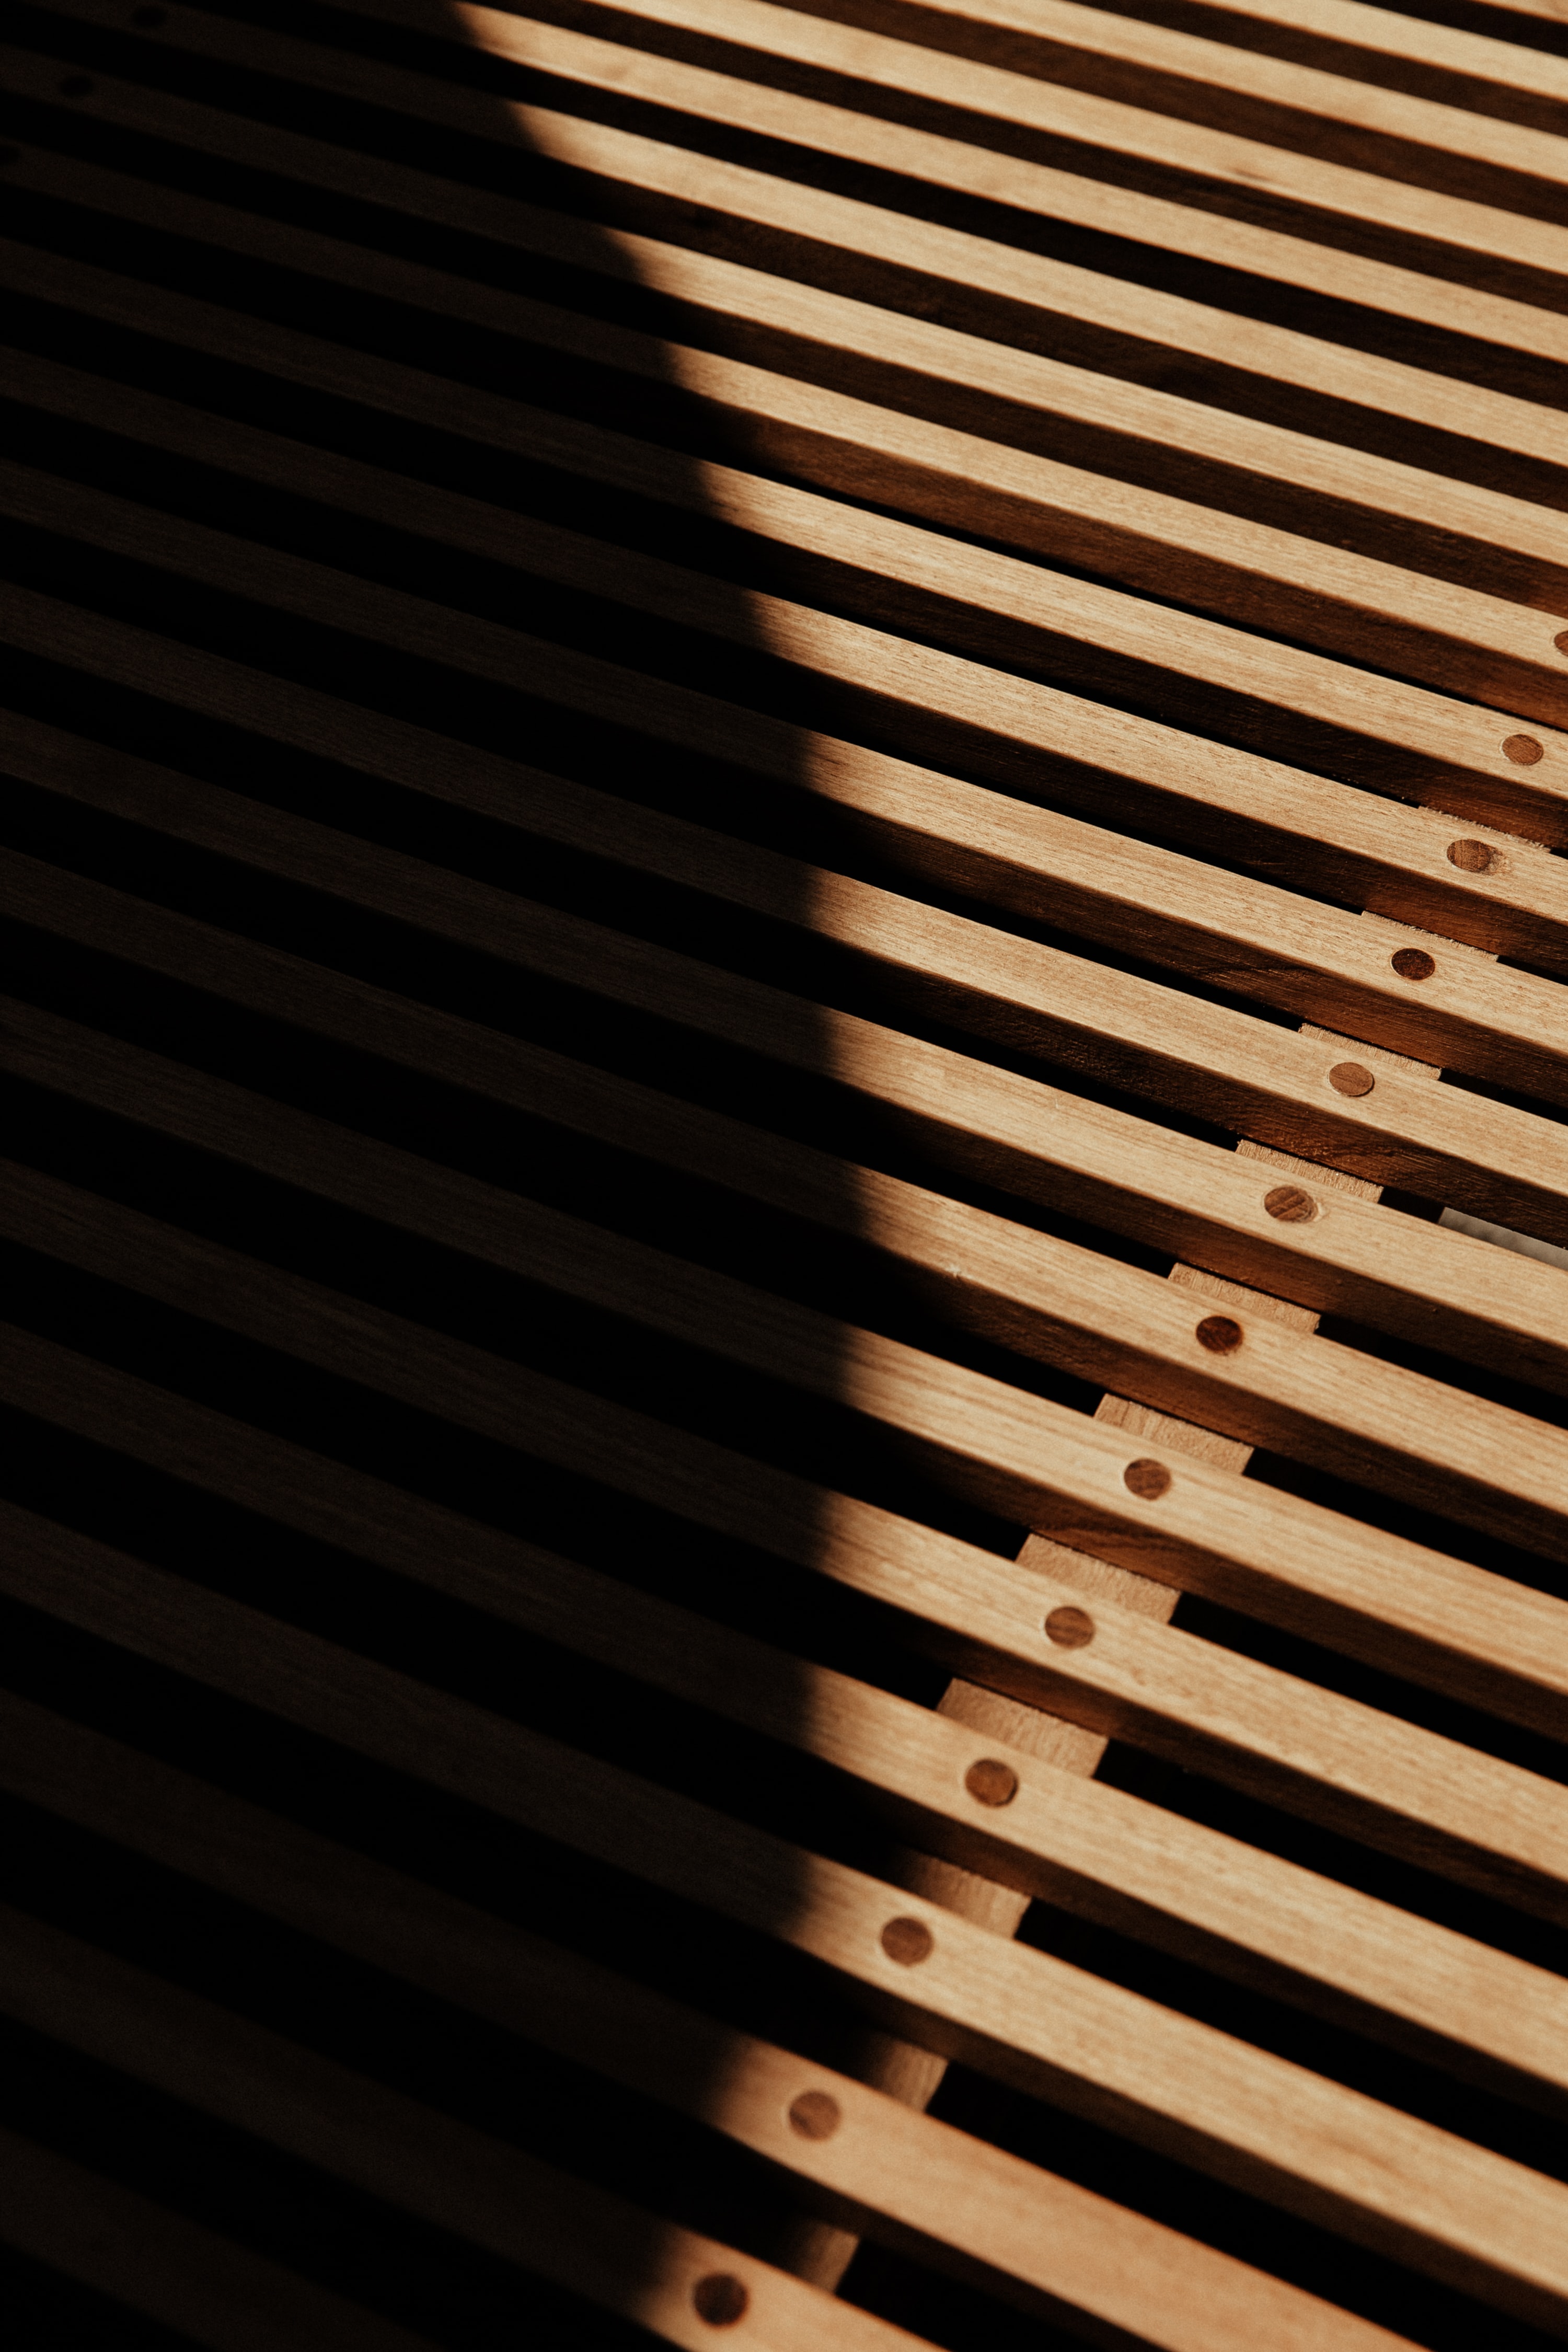 wood, tree, texture, textures, shadow, stripes, streaks, planks, board